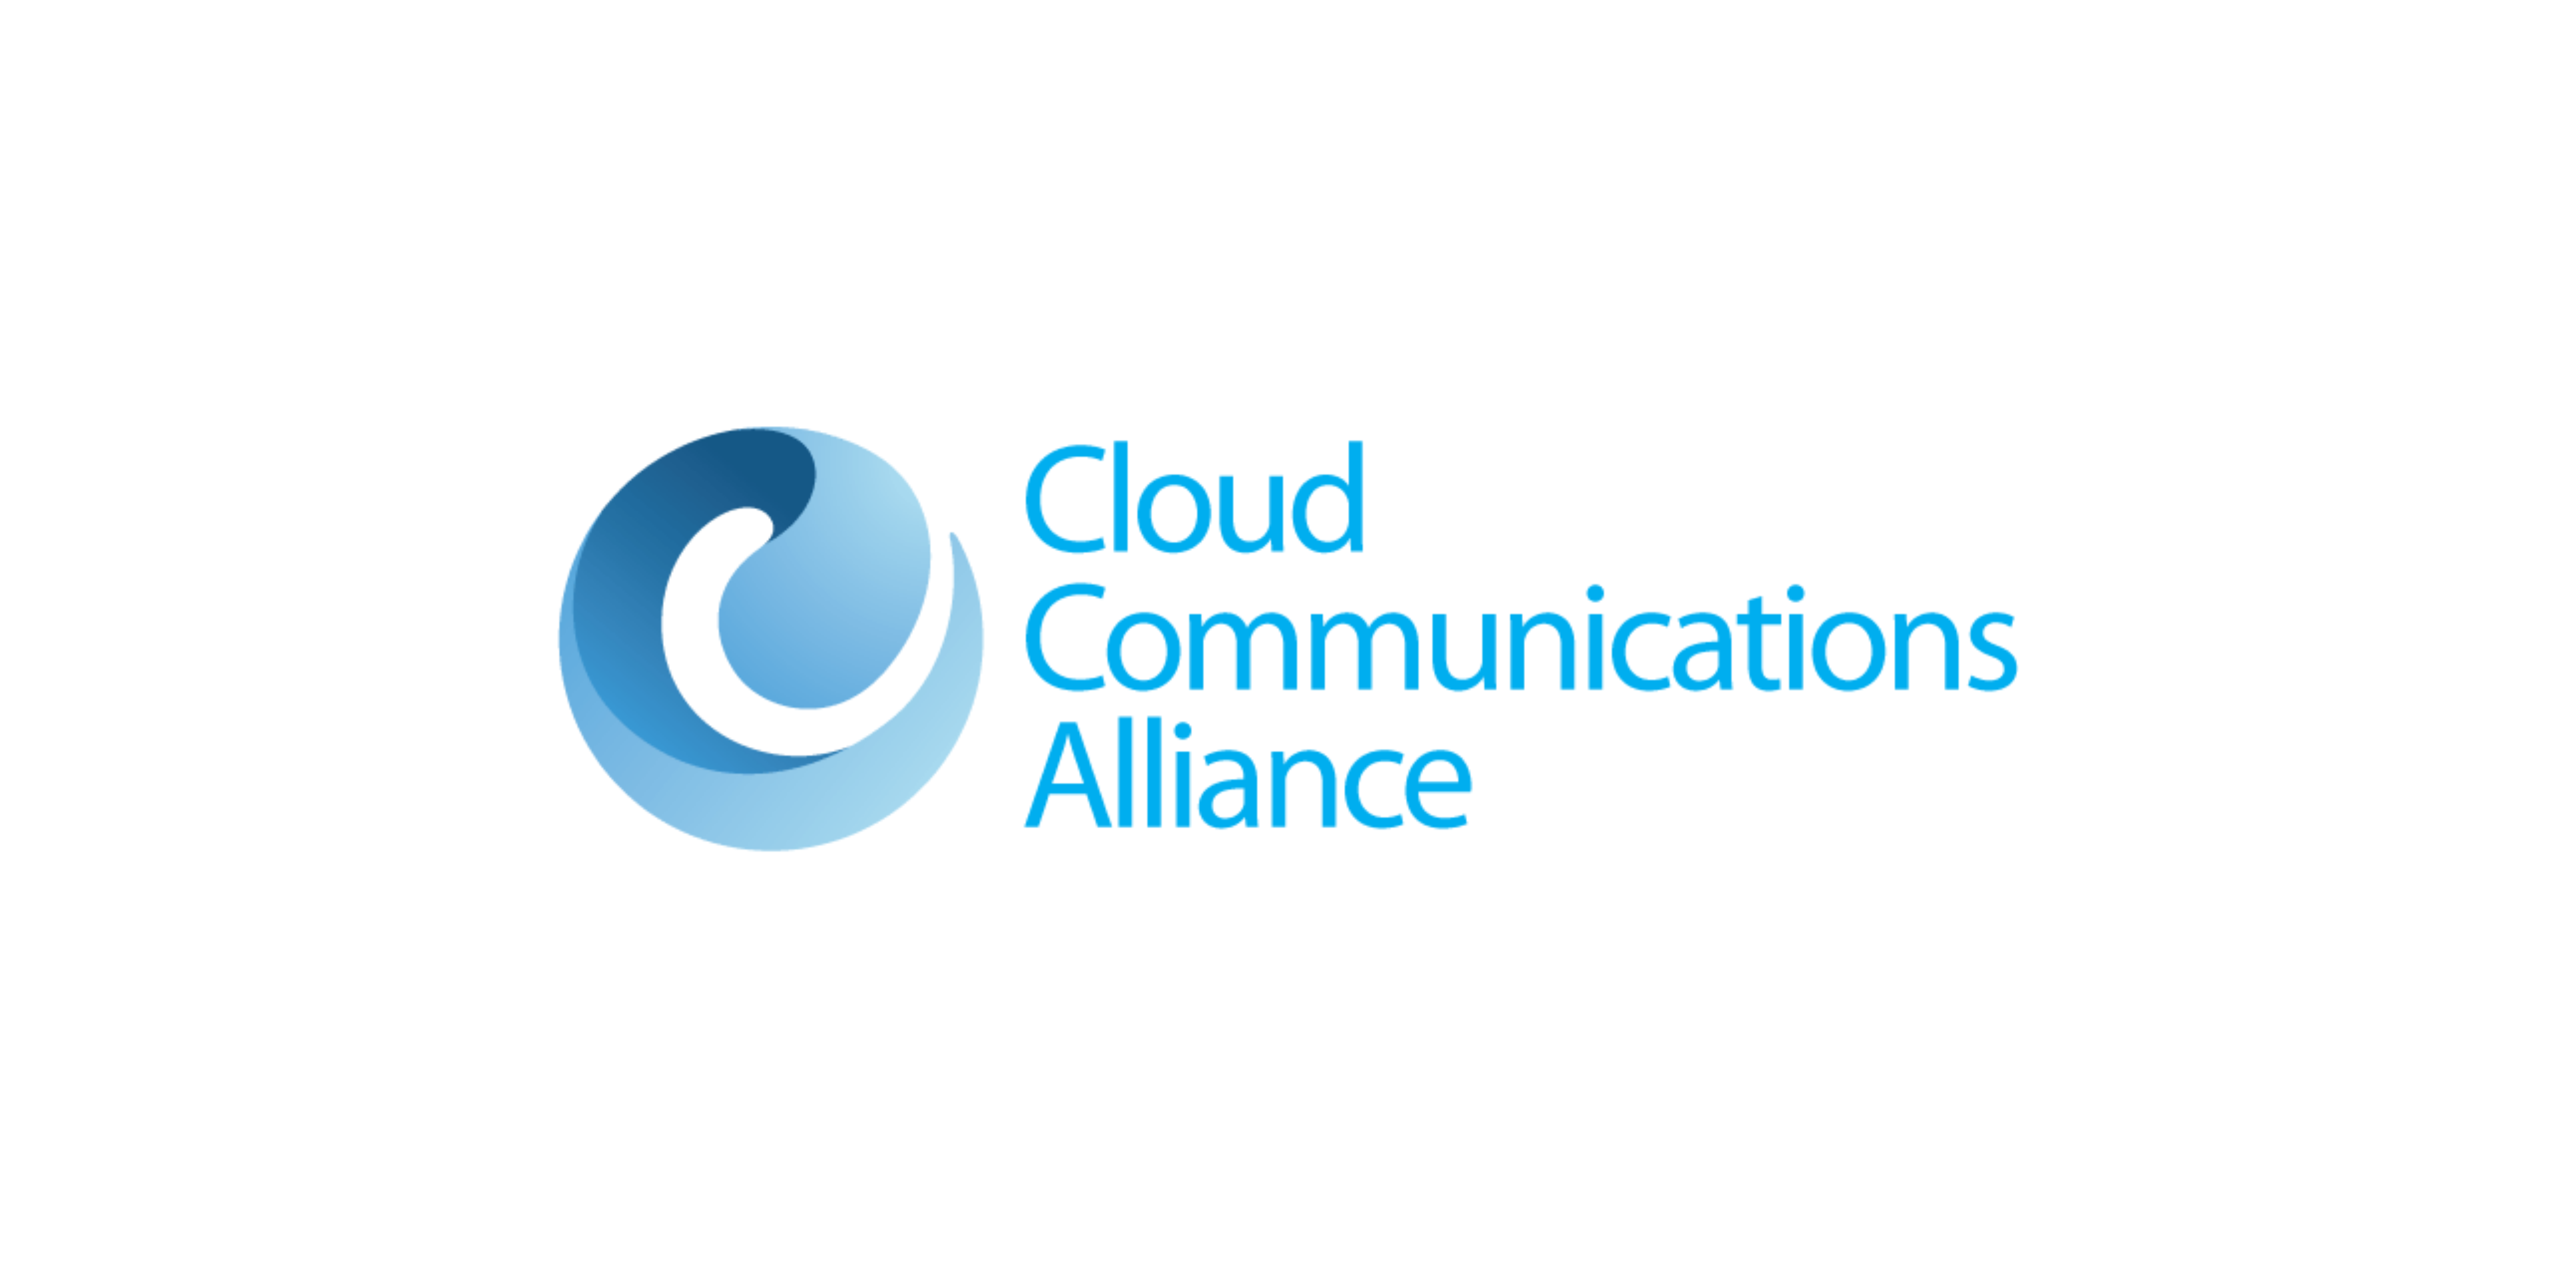 Access Partnership and Cloud Communications Alliance host a webinar to discuss the Cloud EU Regulatory Guidebook